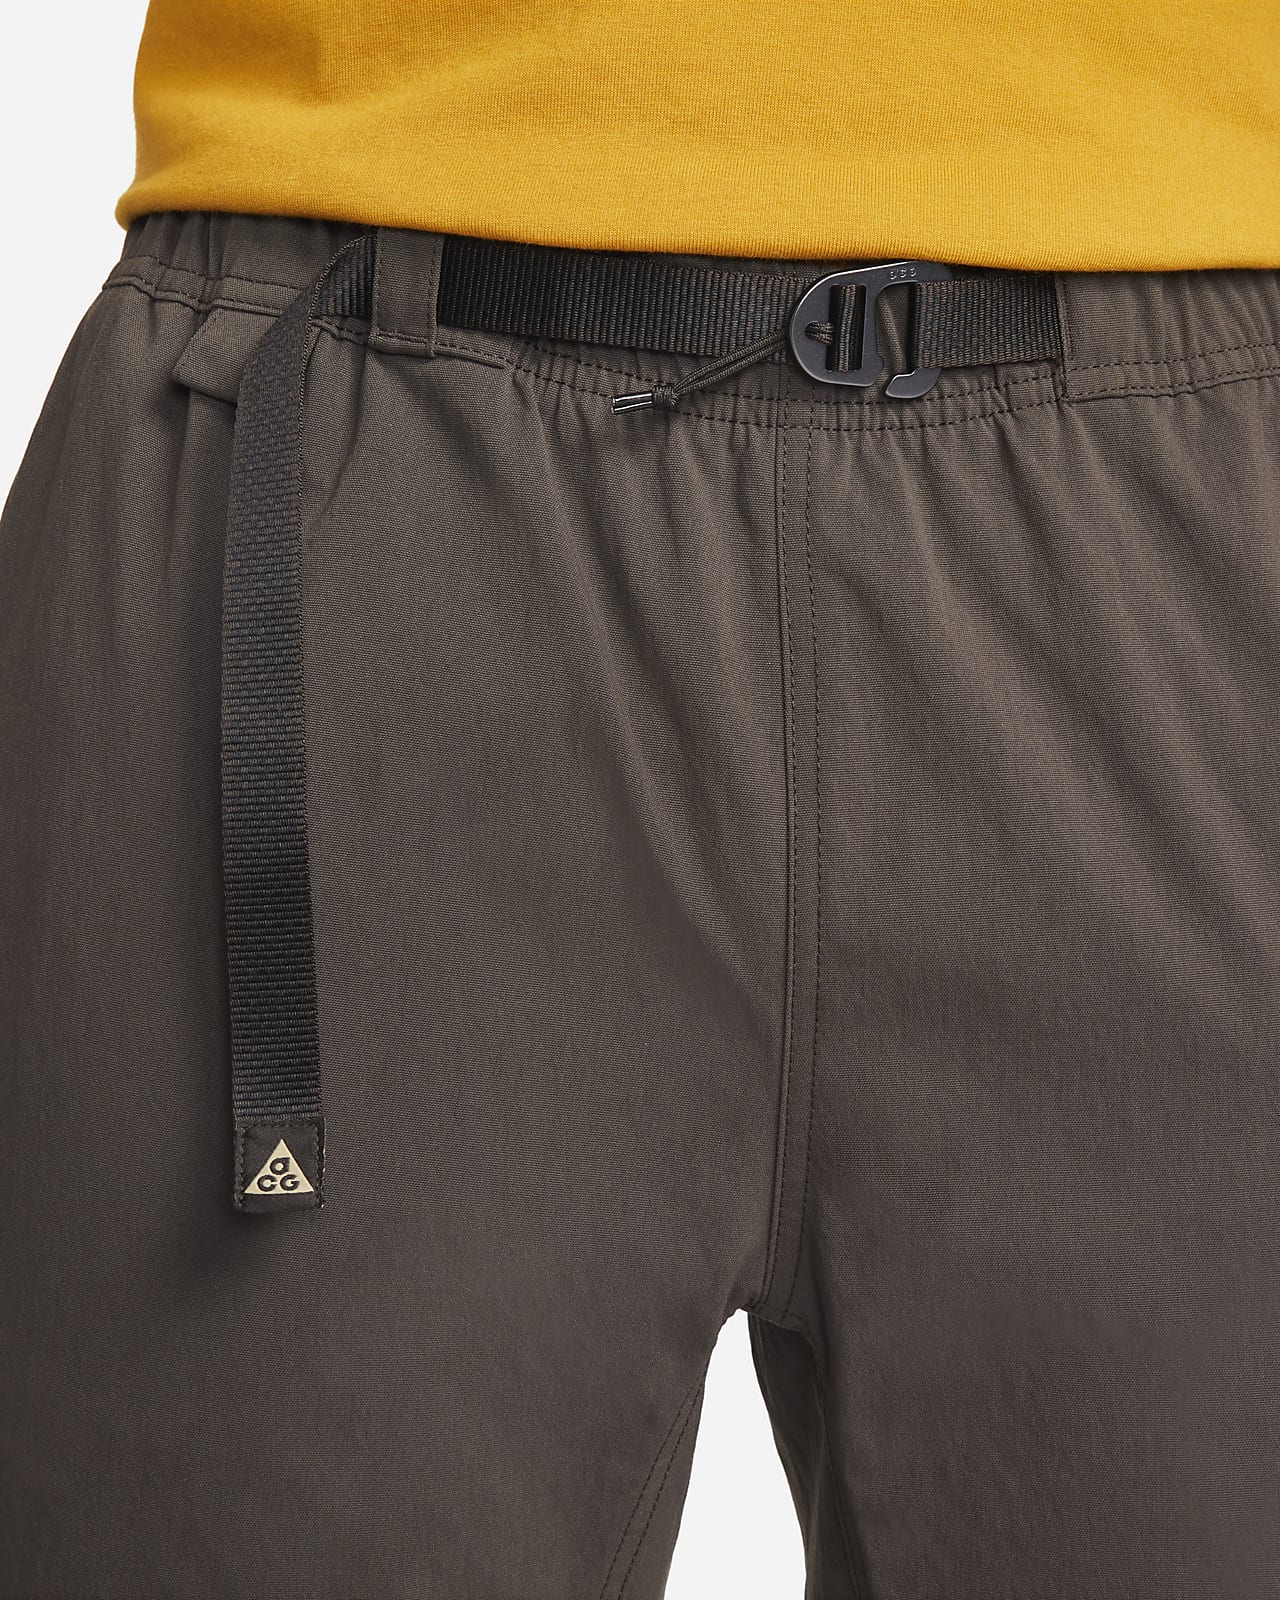 Nike ACG Men's Trail Pants